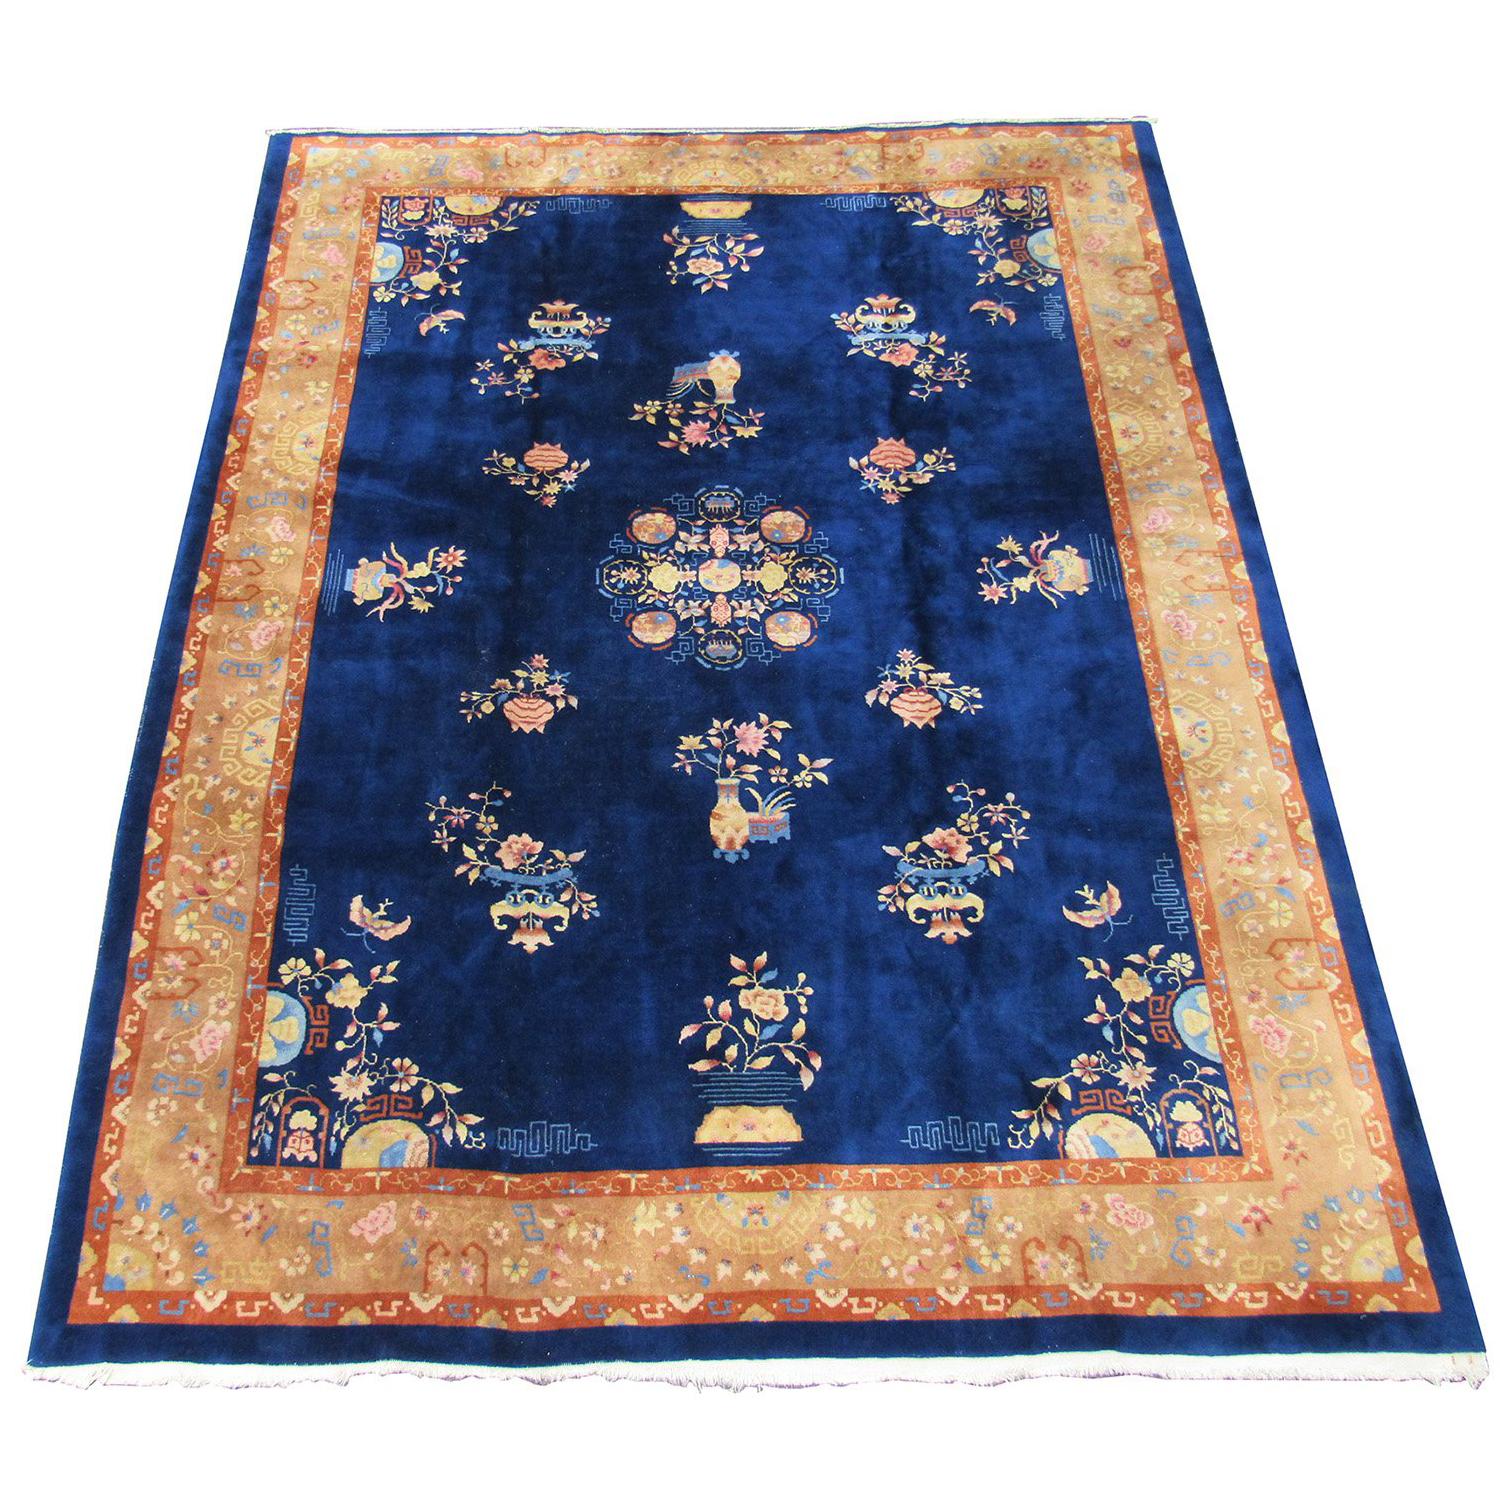 Antique Chinese Art Deco Oriental “Nichols” Carpet in Excellent Condition For Sale